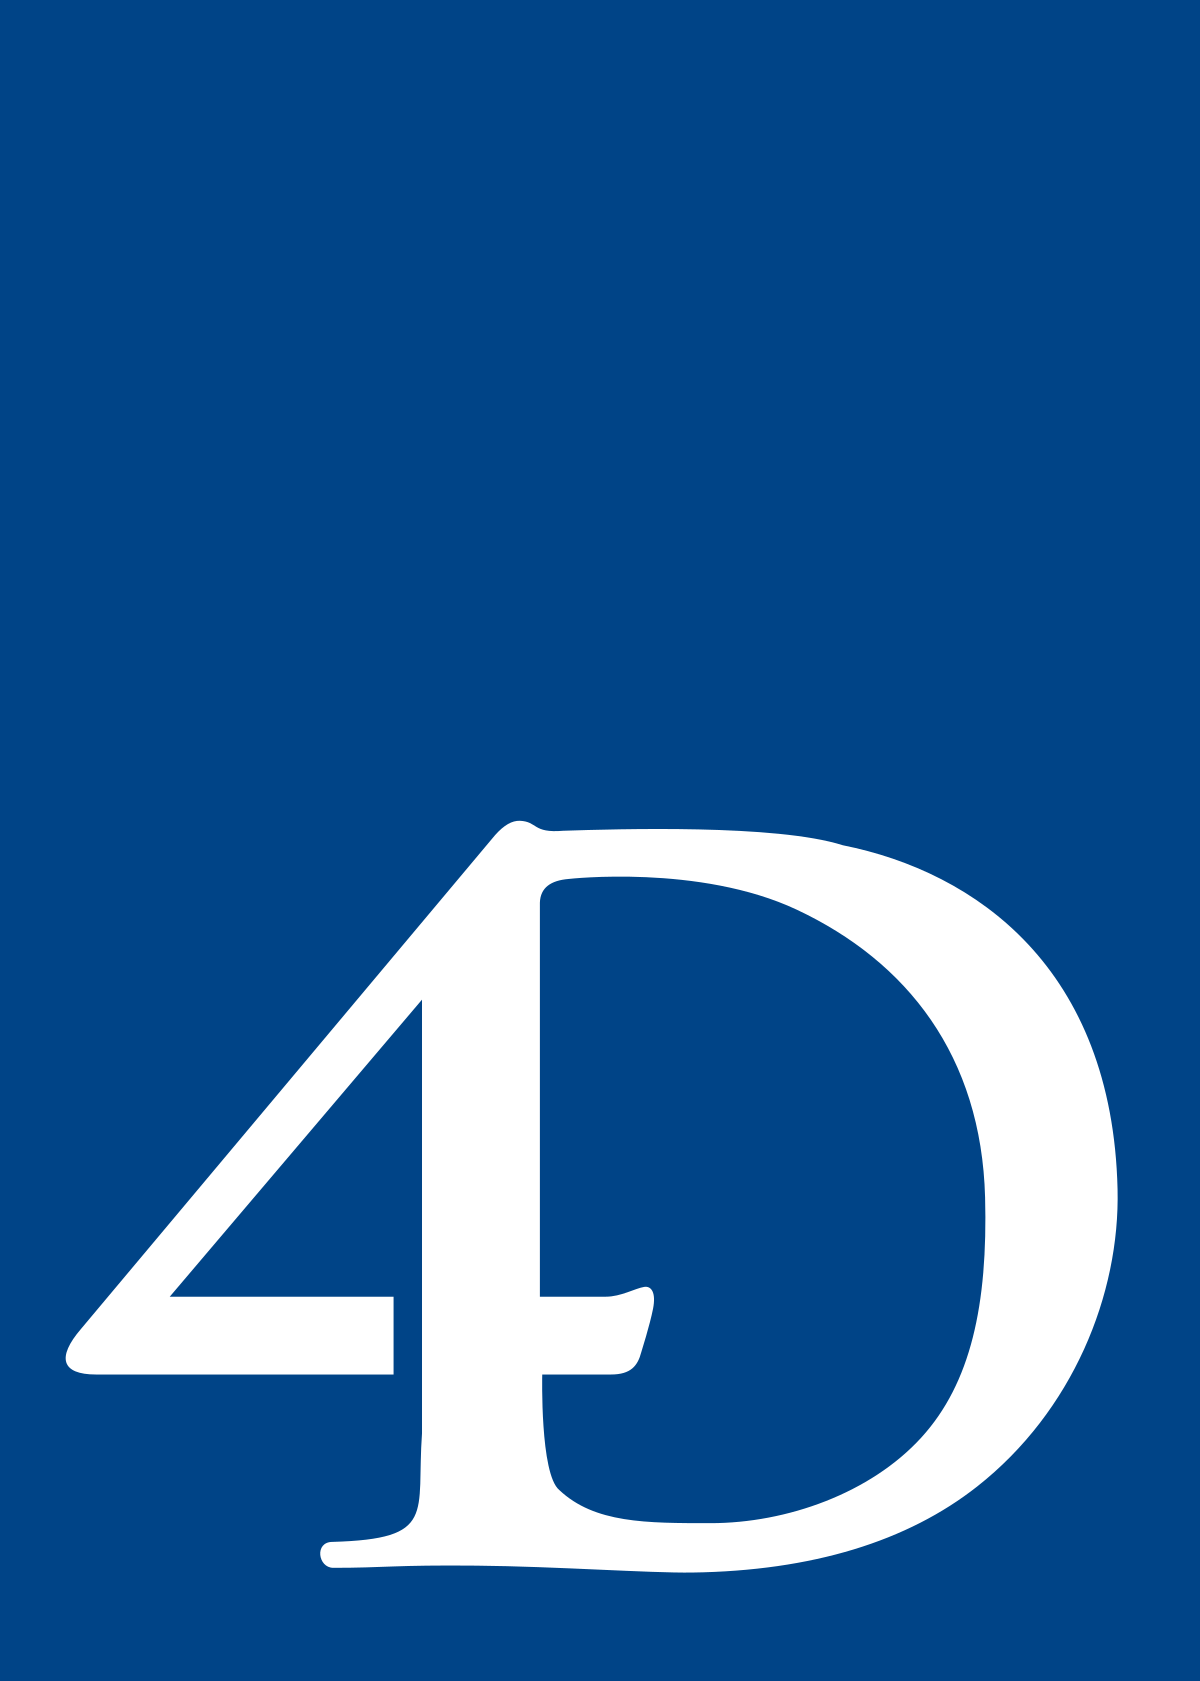 Звук 4 d. 4 Д класс эмблема. 4д логотип. 4d надпись. 4д.